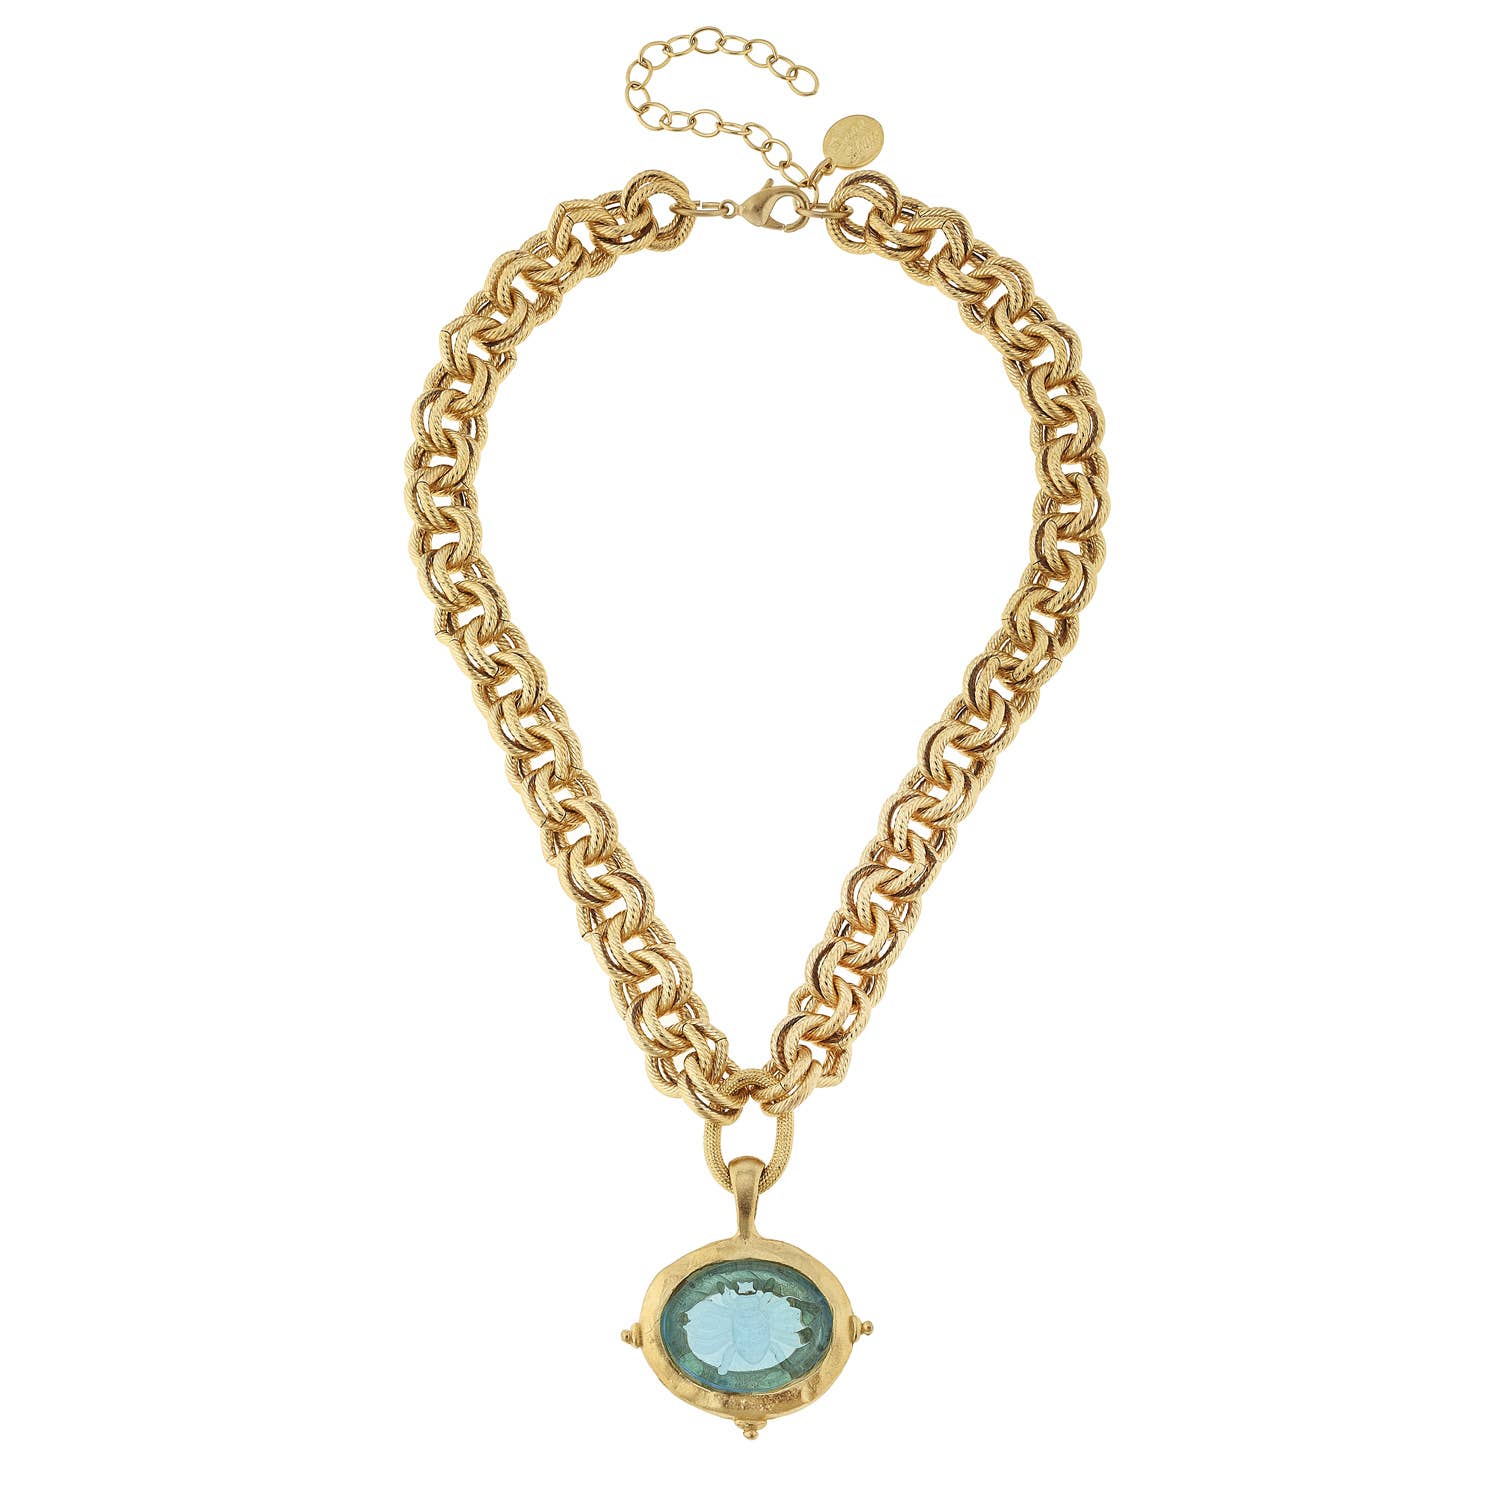 Aqua Venetian Glass Bee Intaglio on Gold Chain Necklace